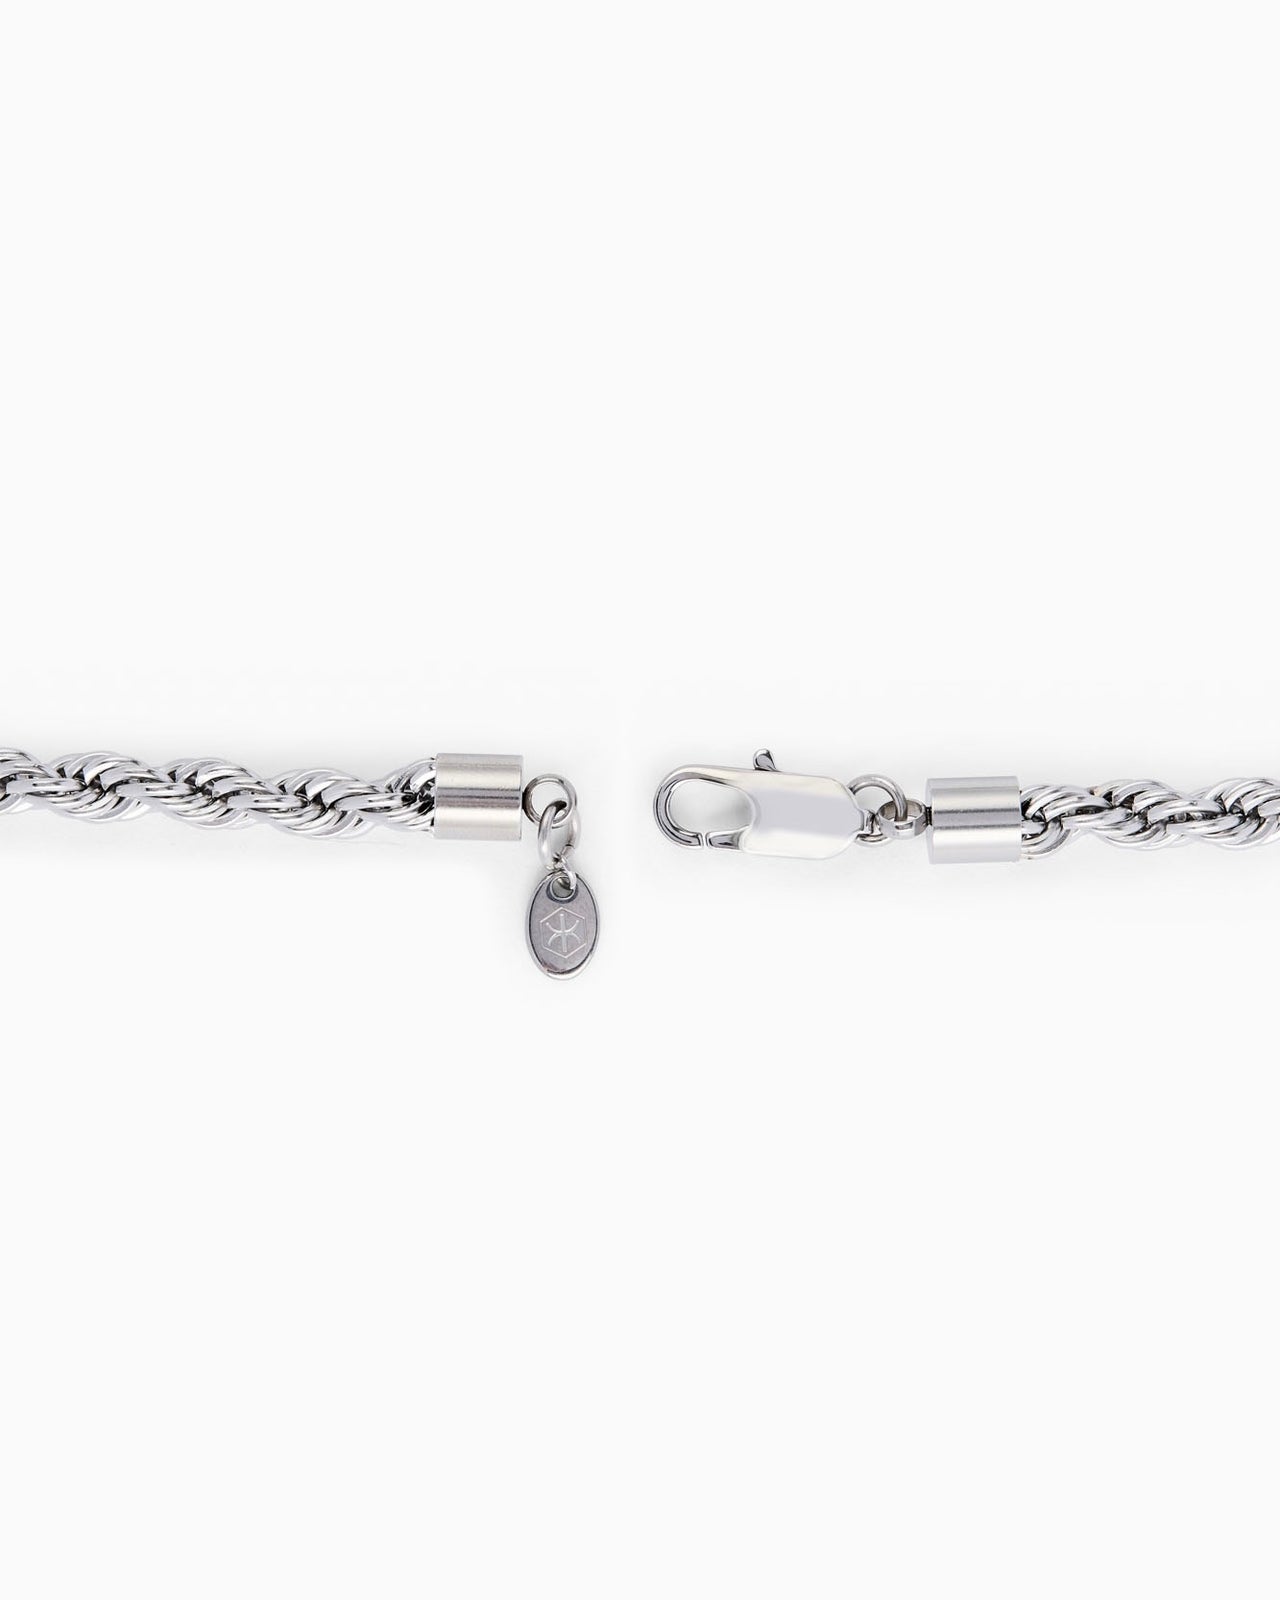 Rope Bracelet (Silver) 6mm